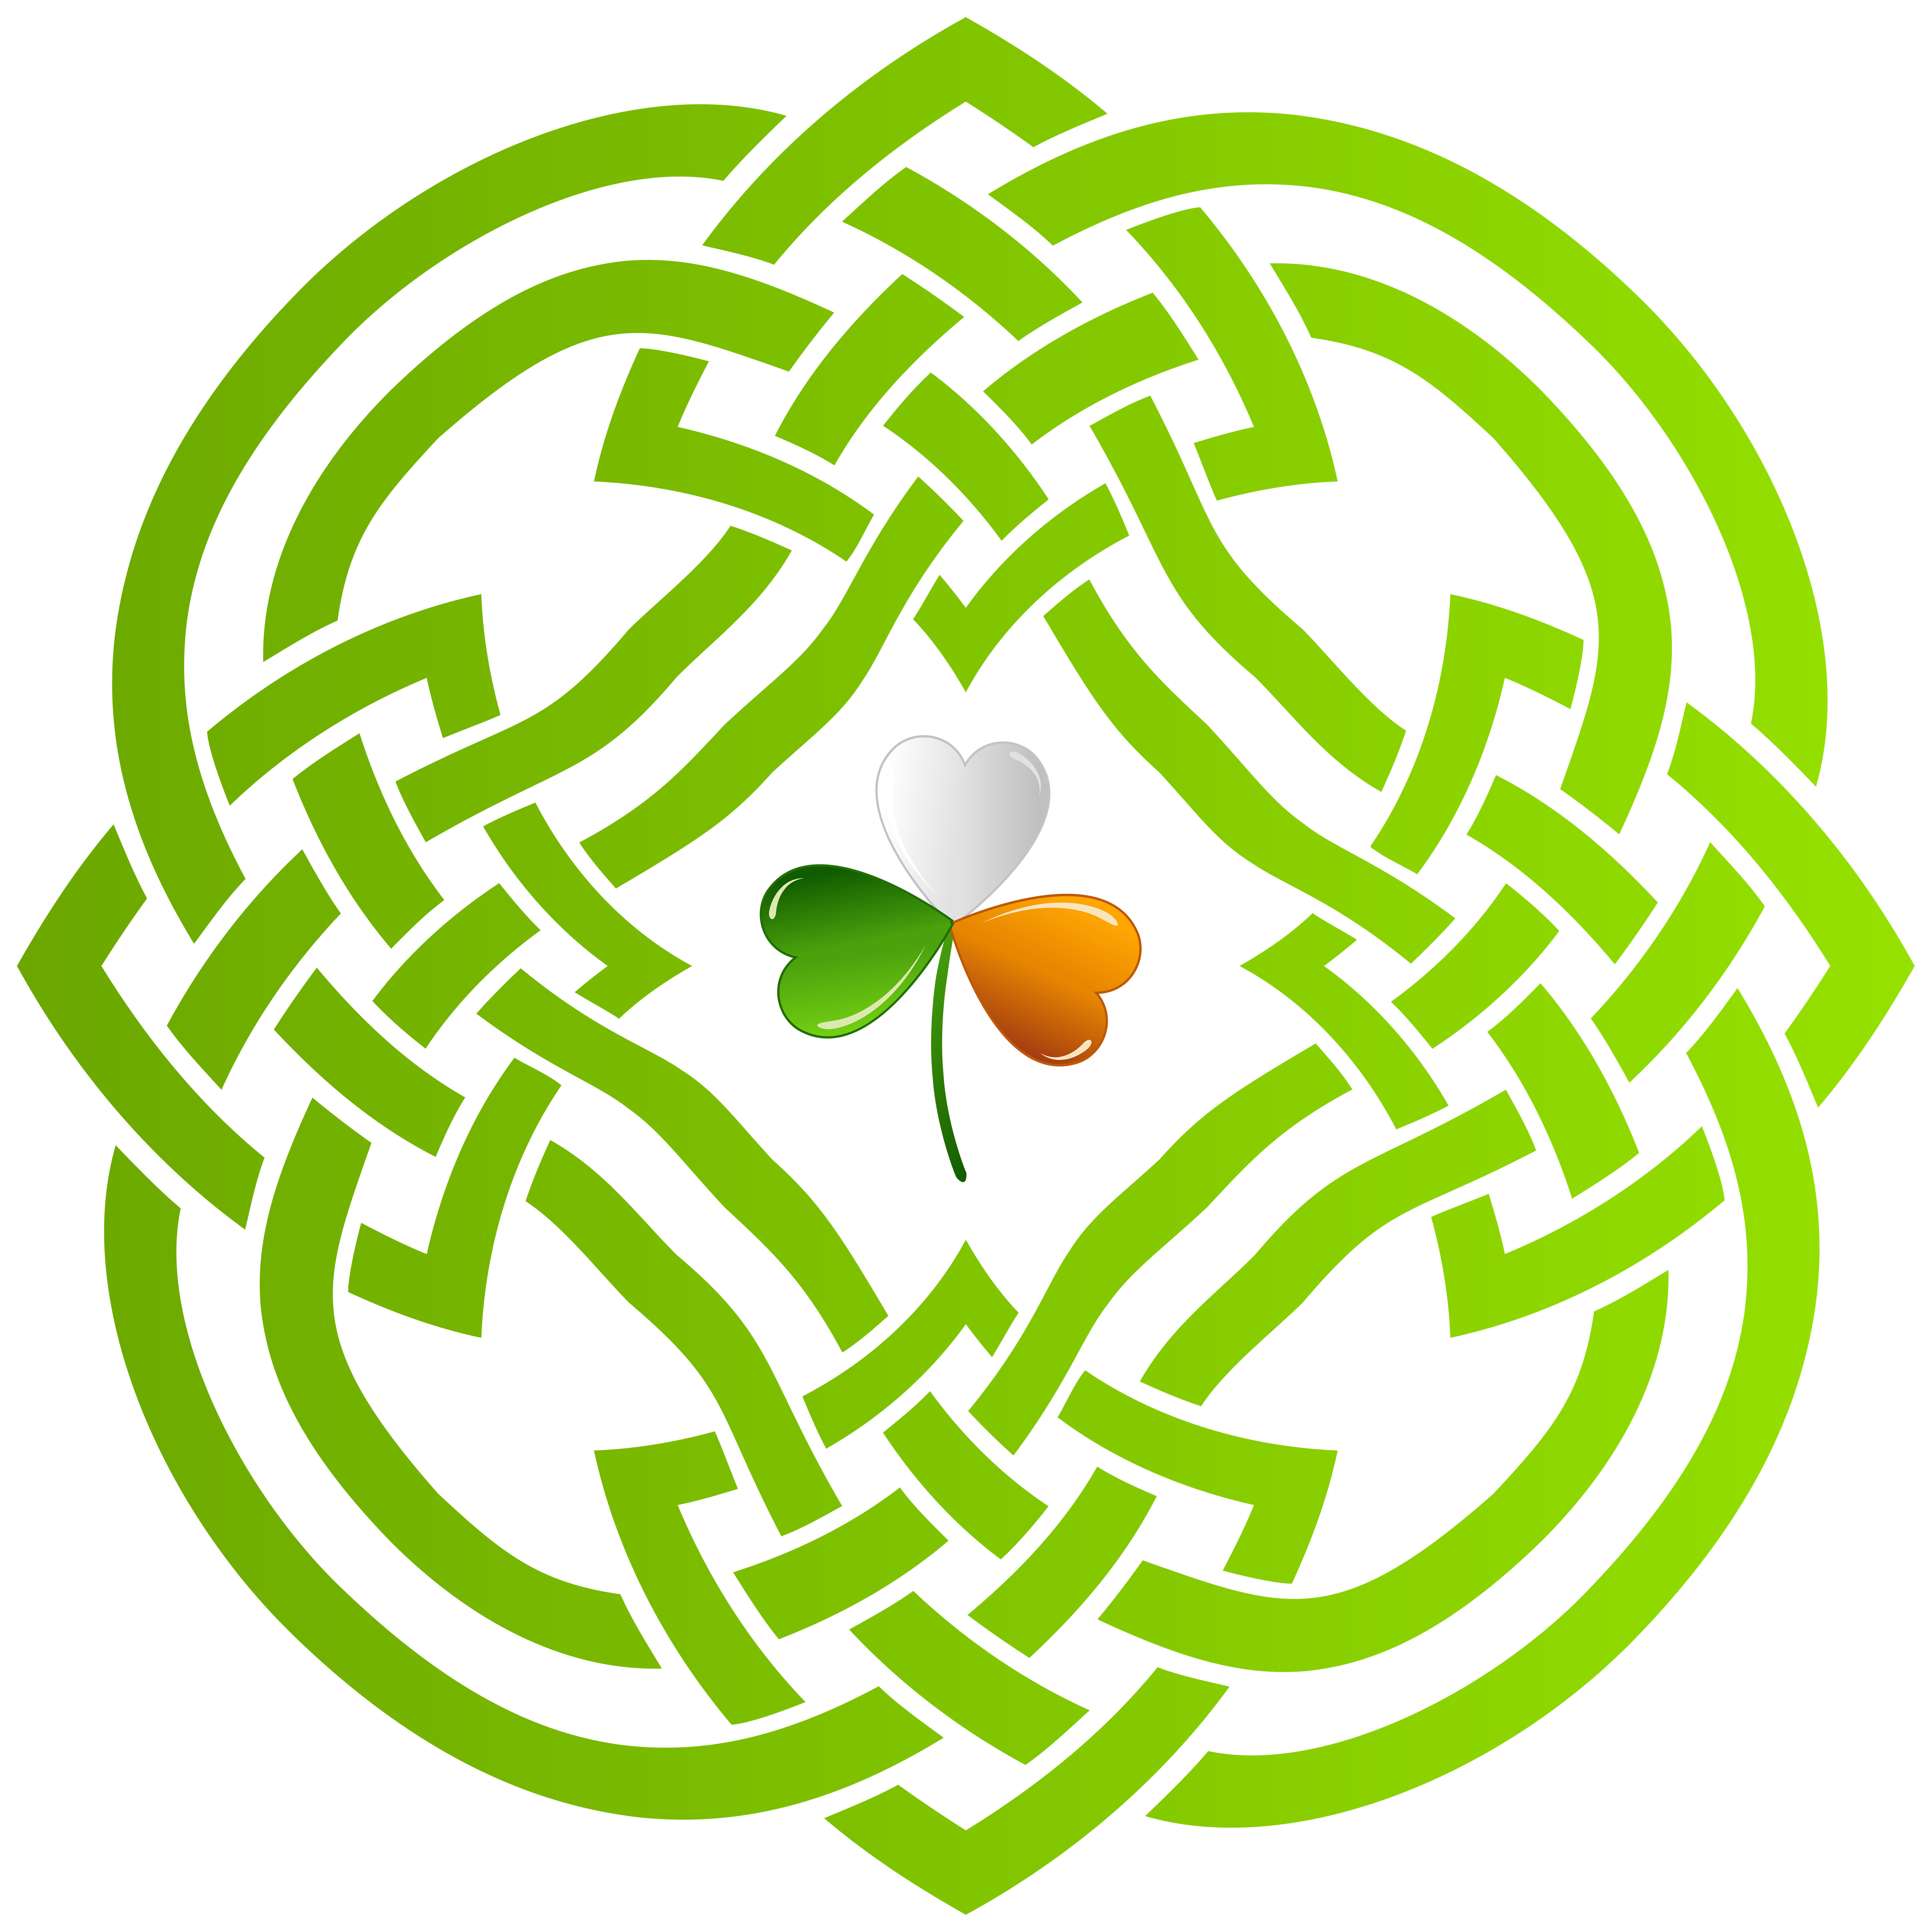 Celtic Knot and Irish Shamrock Transparent PNG Clip Art Image 